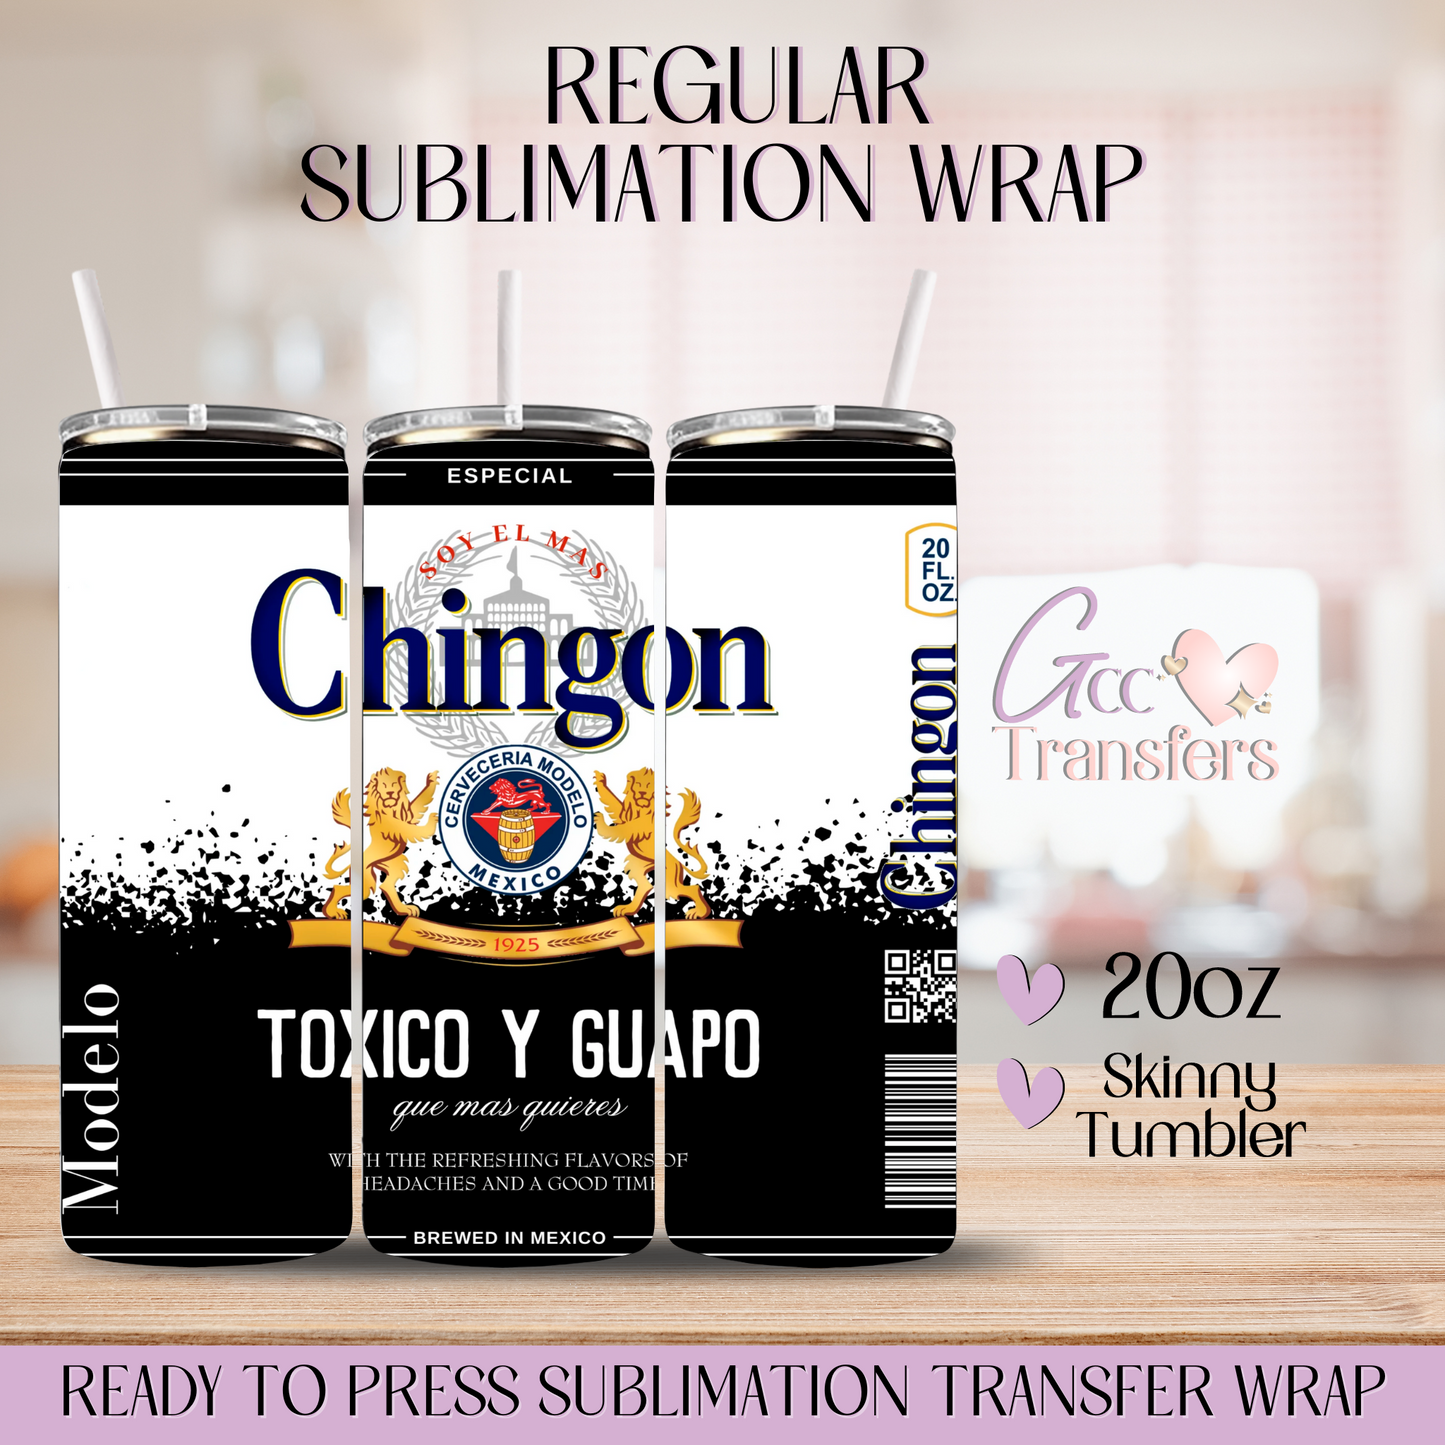 Chingon, Toxico, Guapo - 20oz Regular Sublimation Wrap